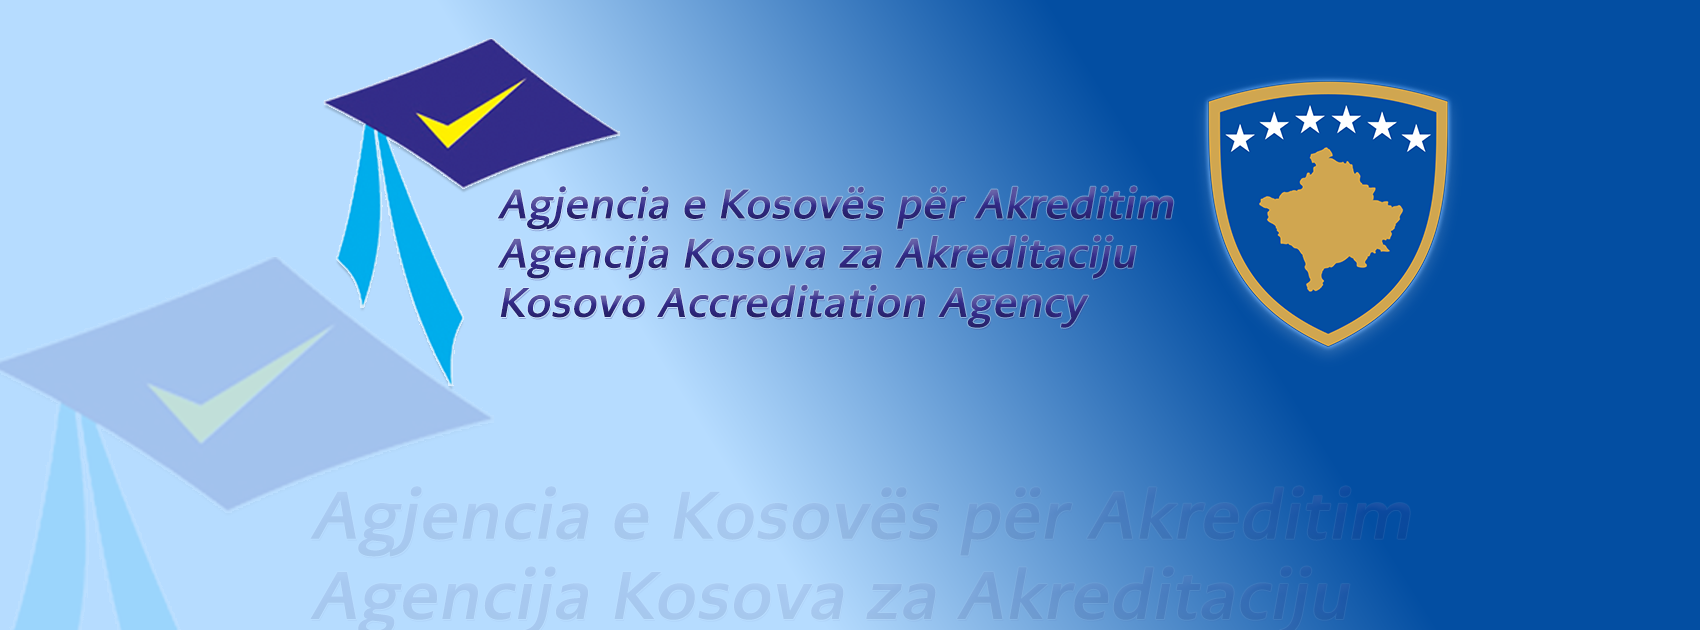 agjencia-e-kosoves-per-akreditim-behet-anetare-affiliate-e-enqa-s